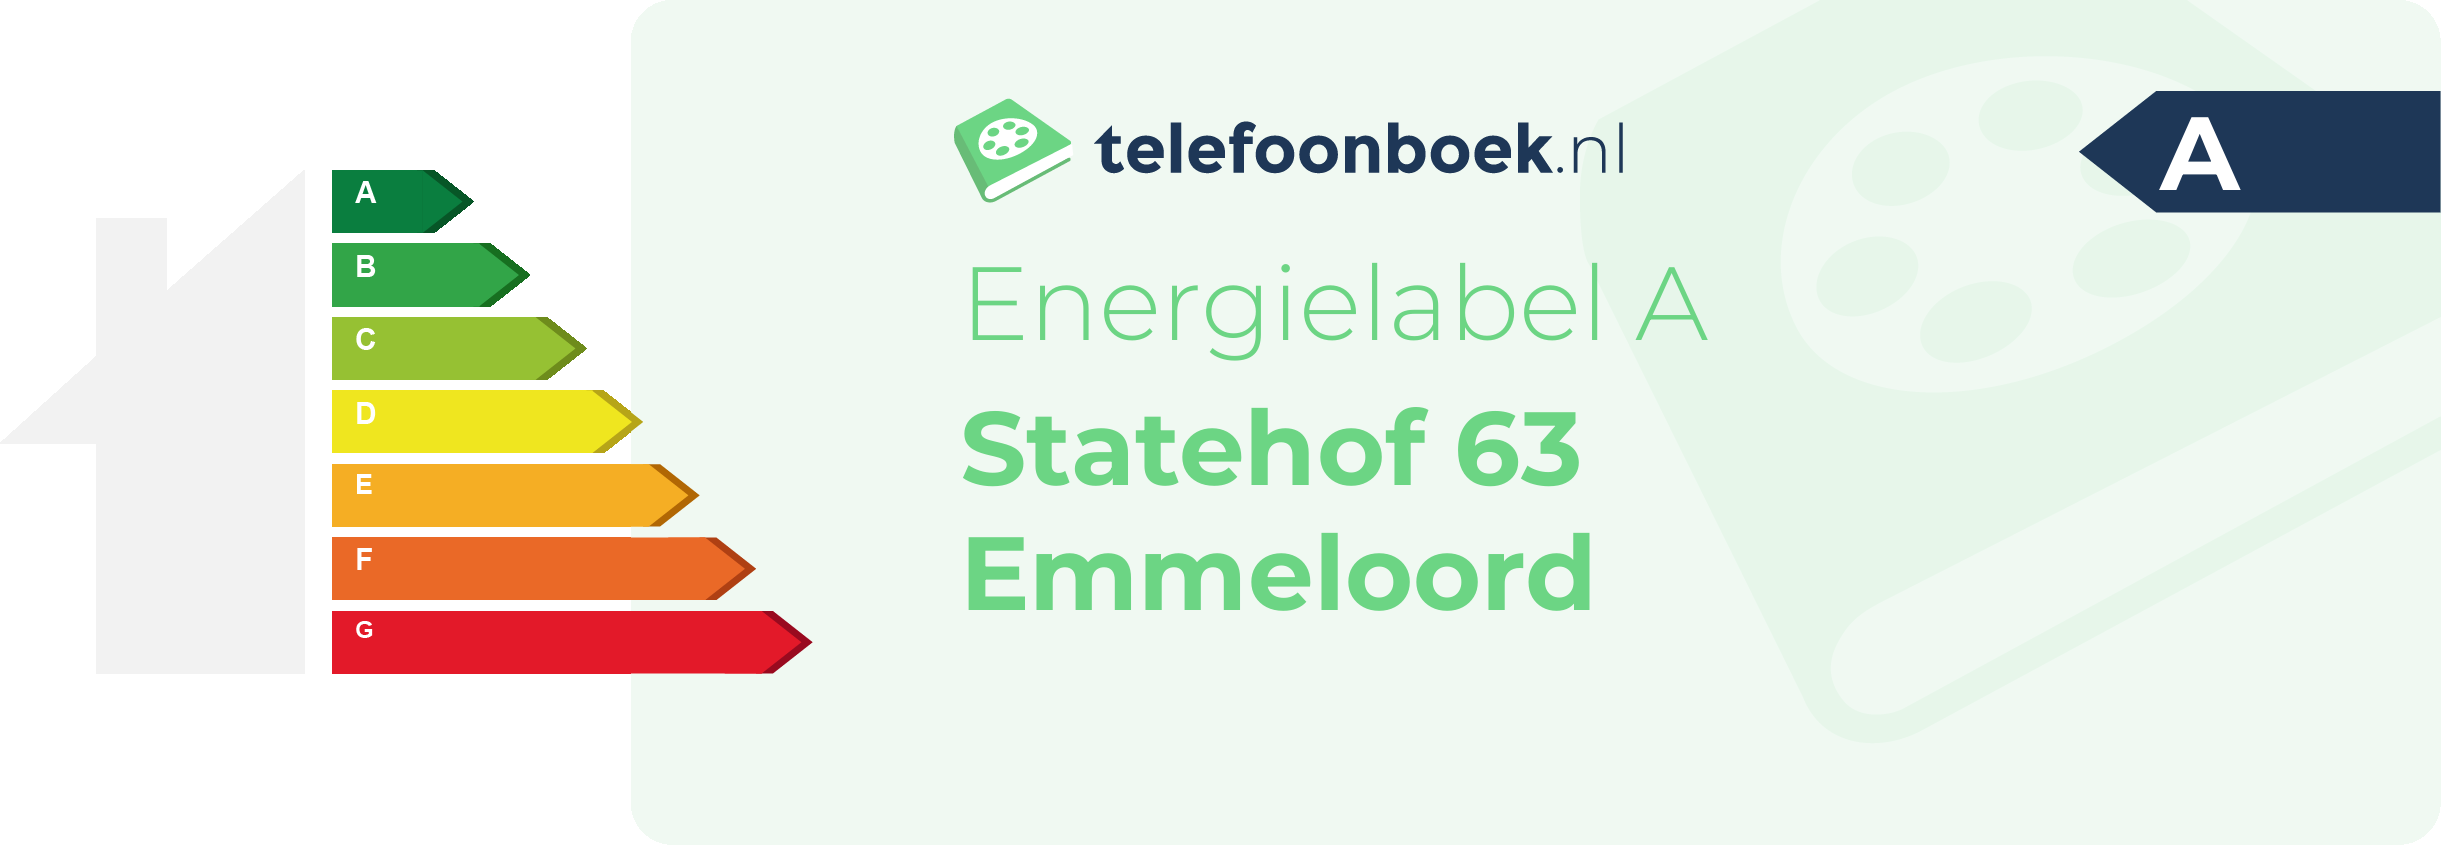 Energielabel Statehof 63 Emmeloord